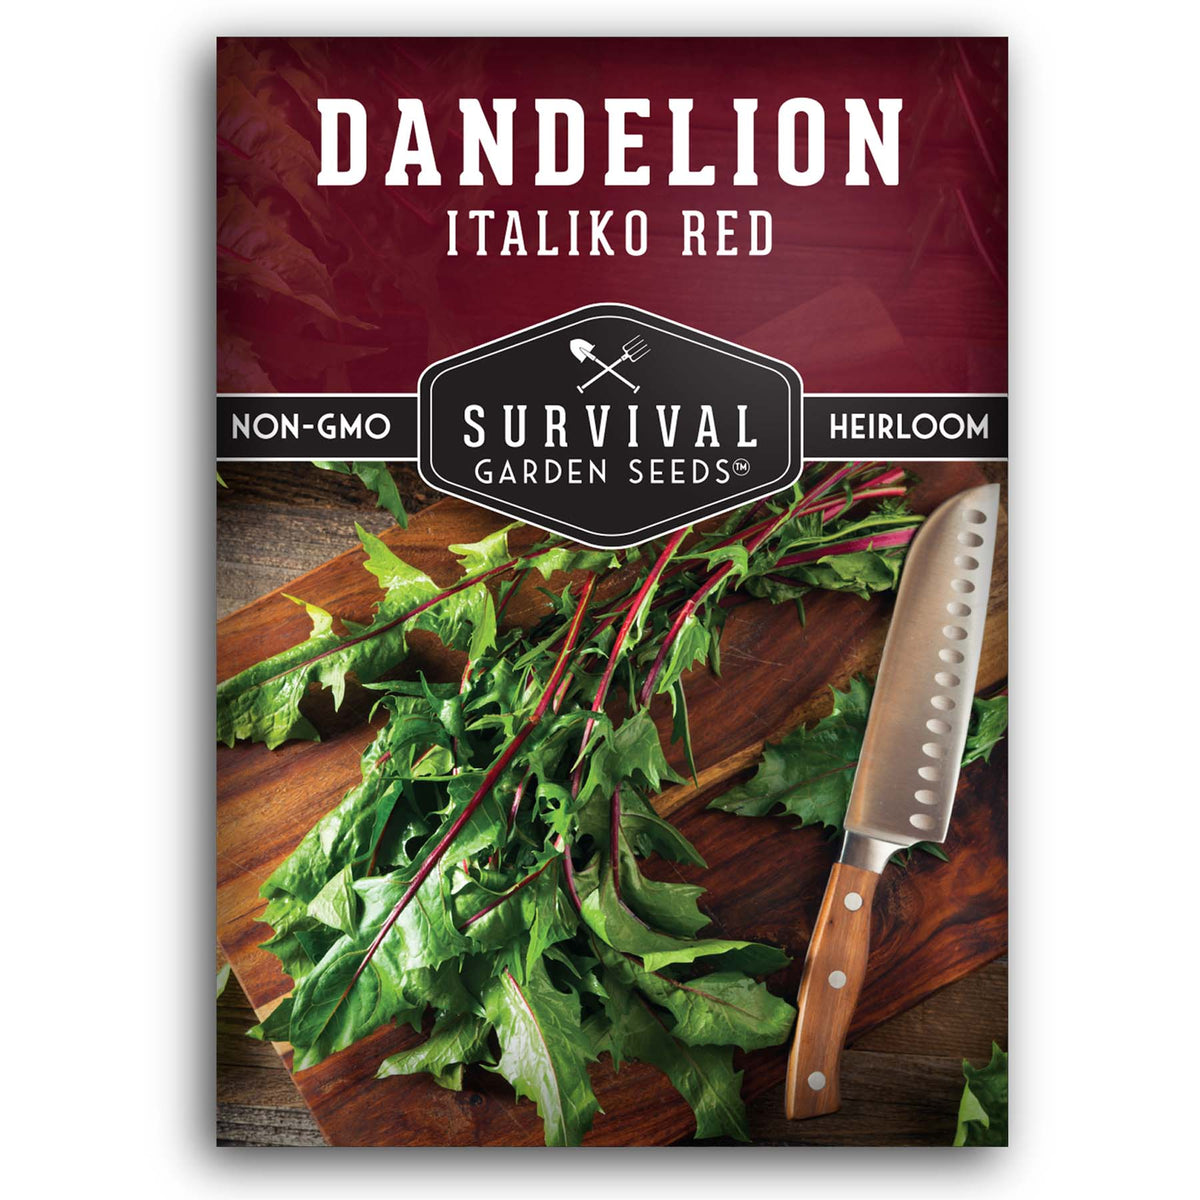 Italiko Red Dandelion seeds for planting